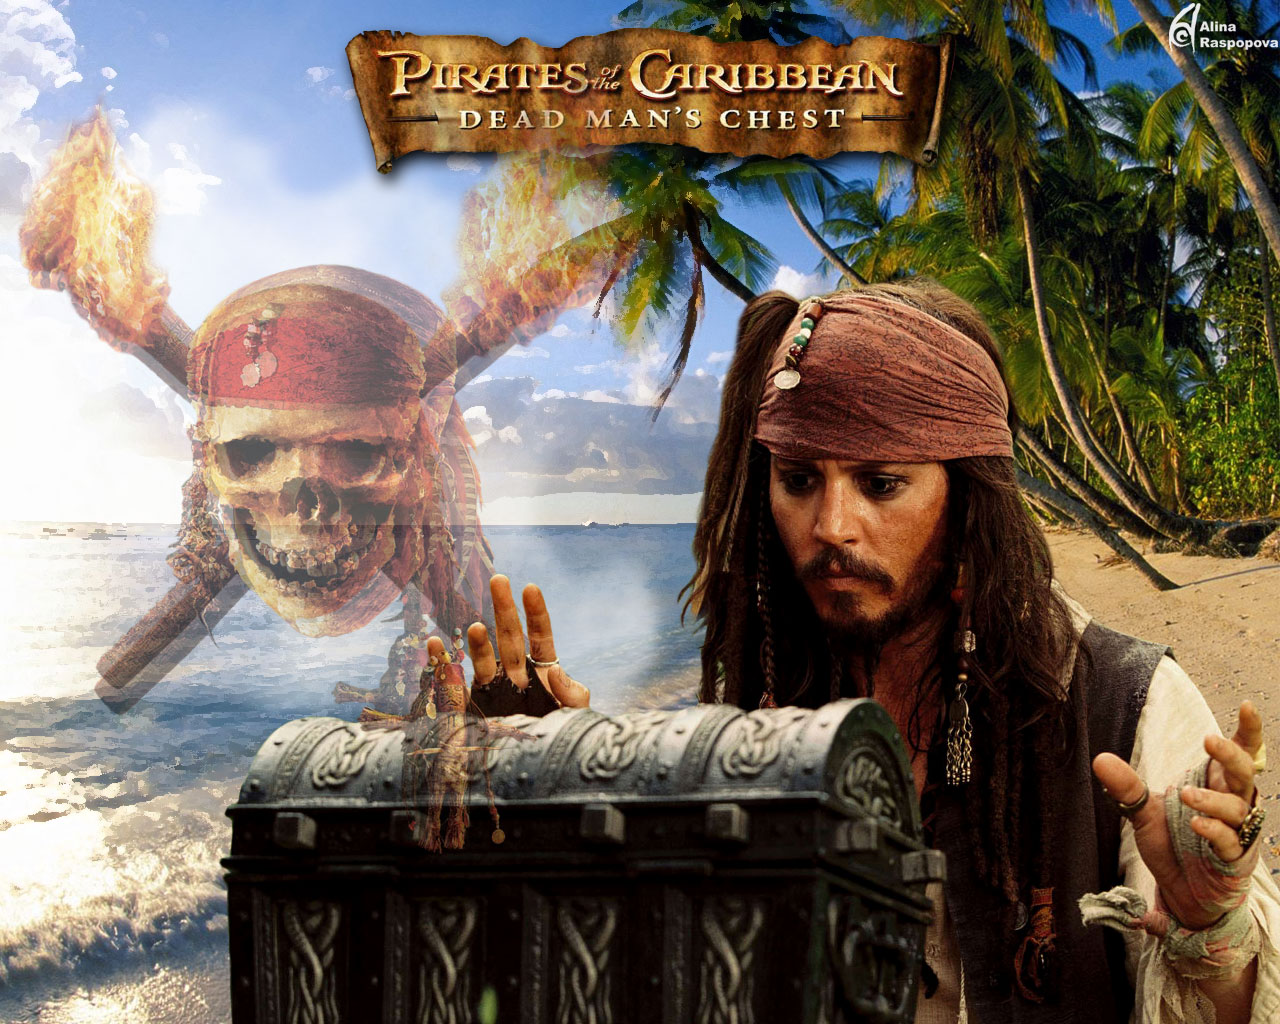 Pirates des caraibes 2